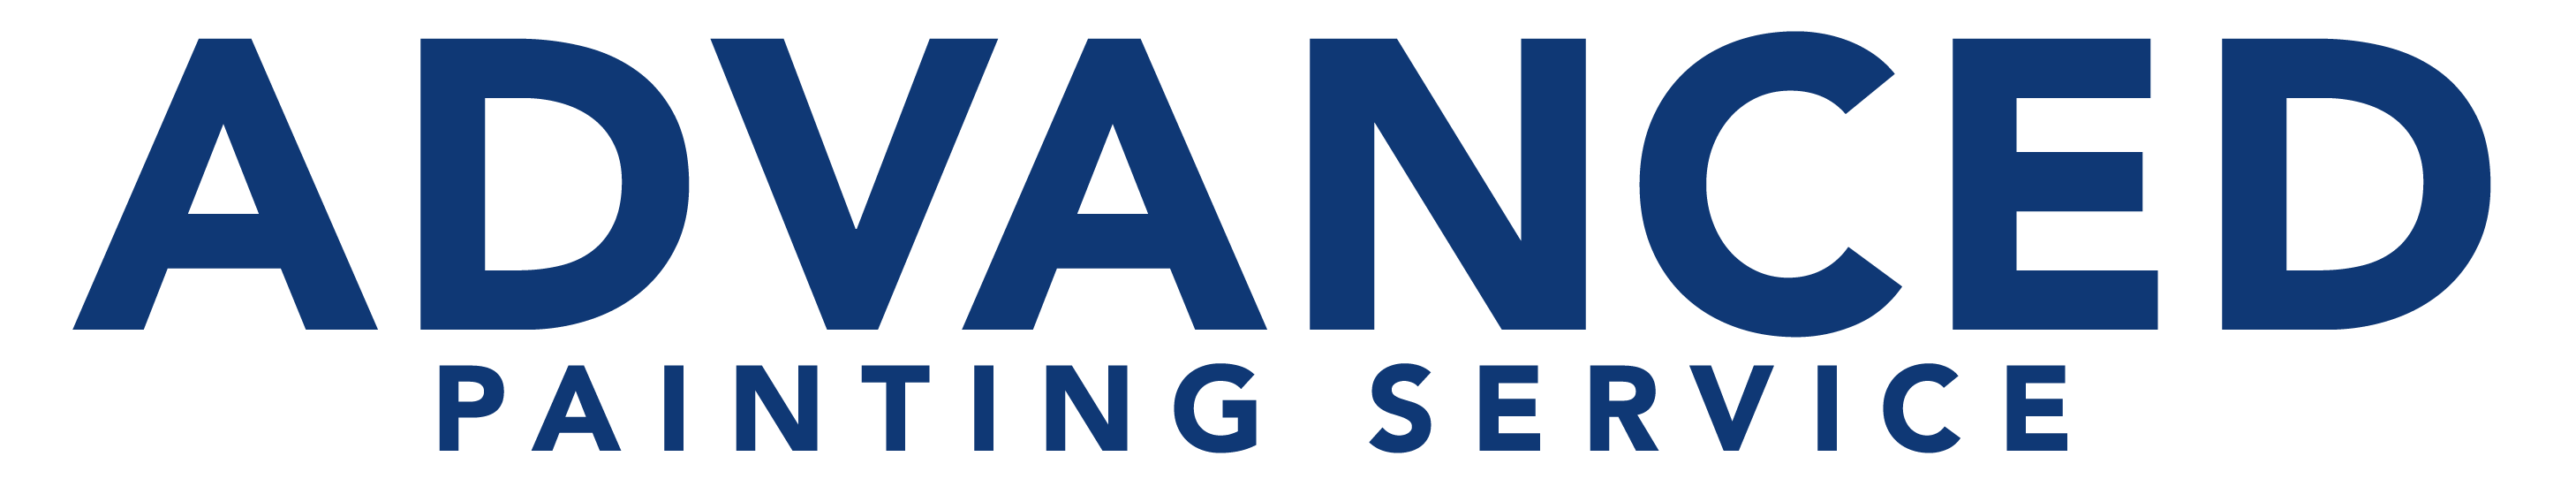 advanced painting service logo